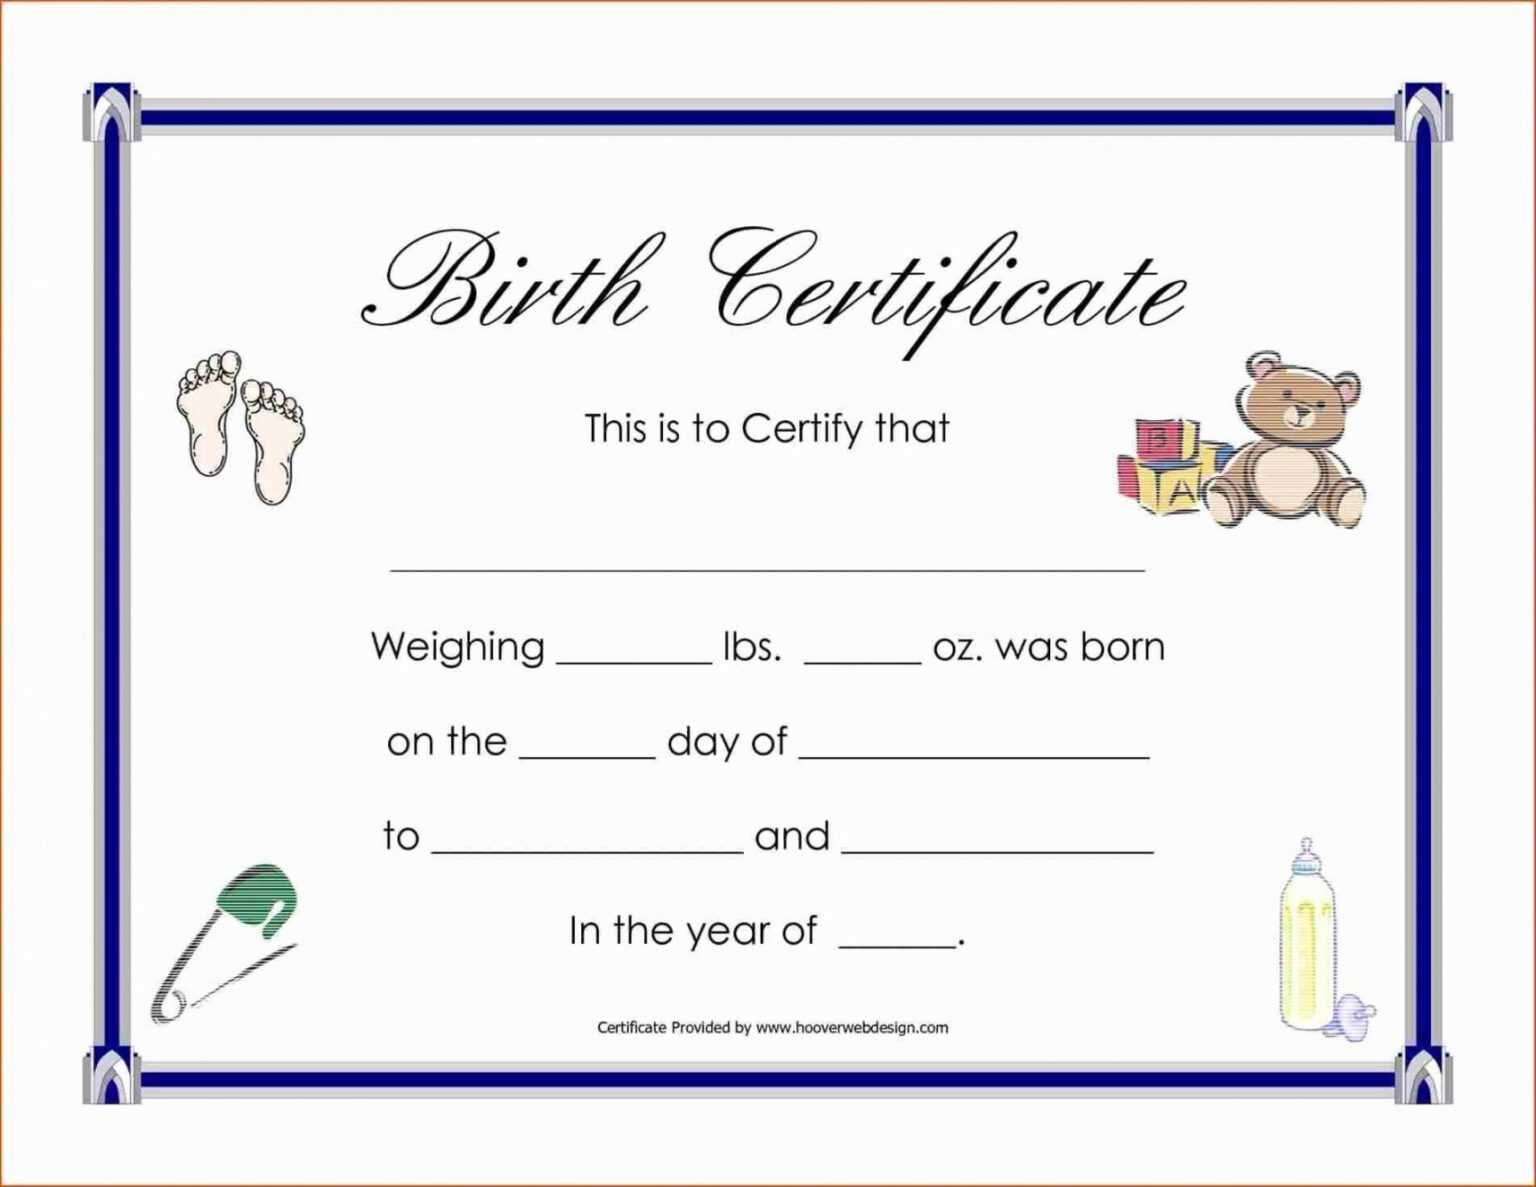 Child Adoption Certificate Template Calep midnightpig co Regarding